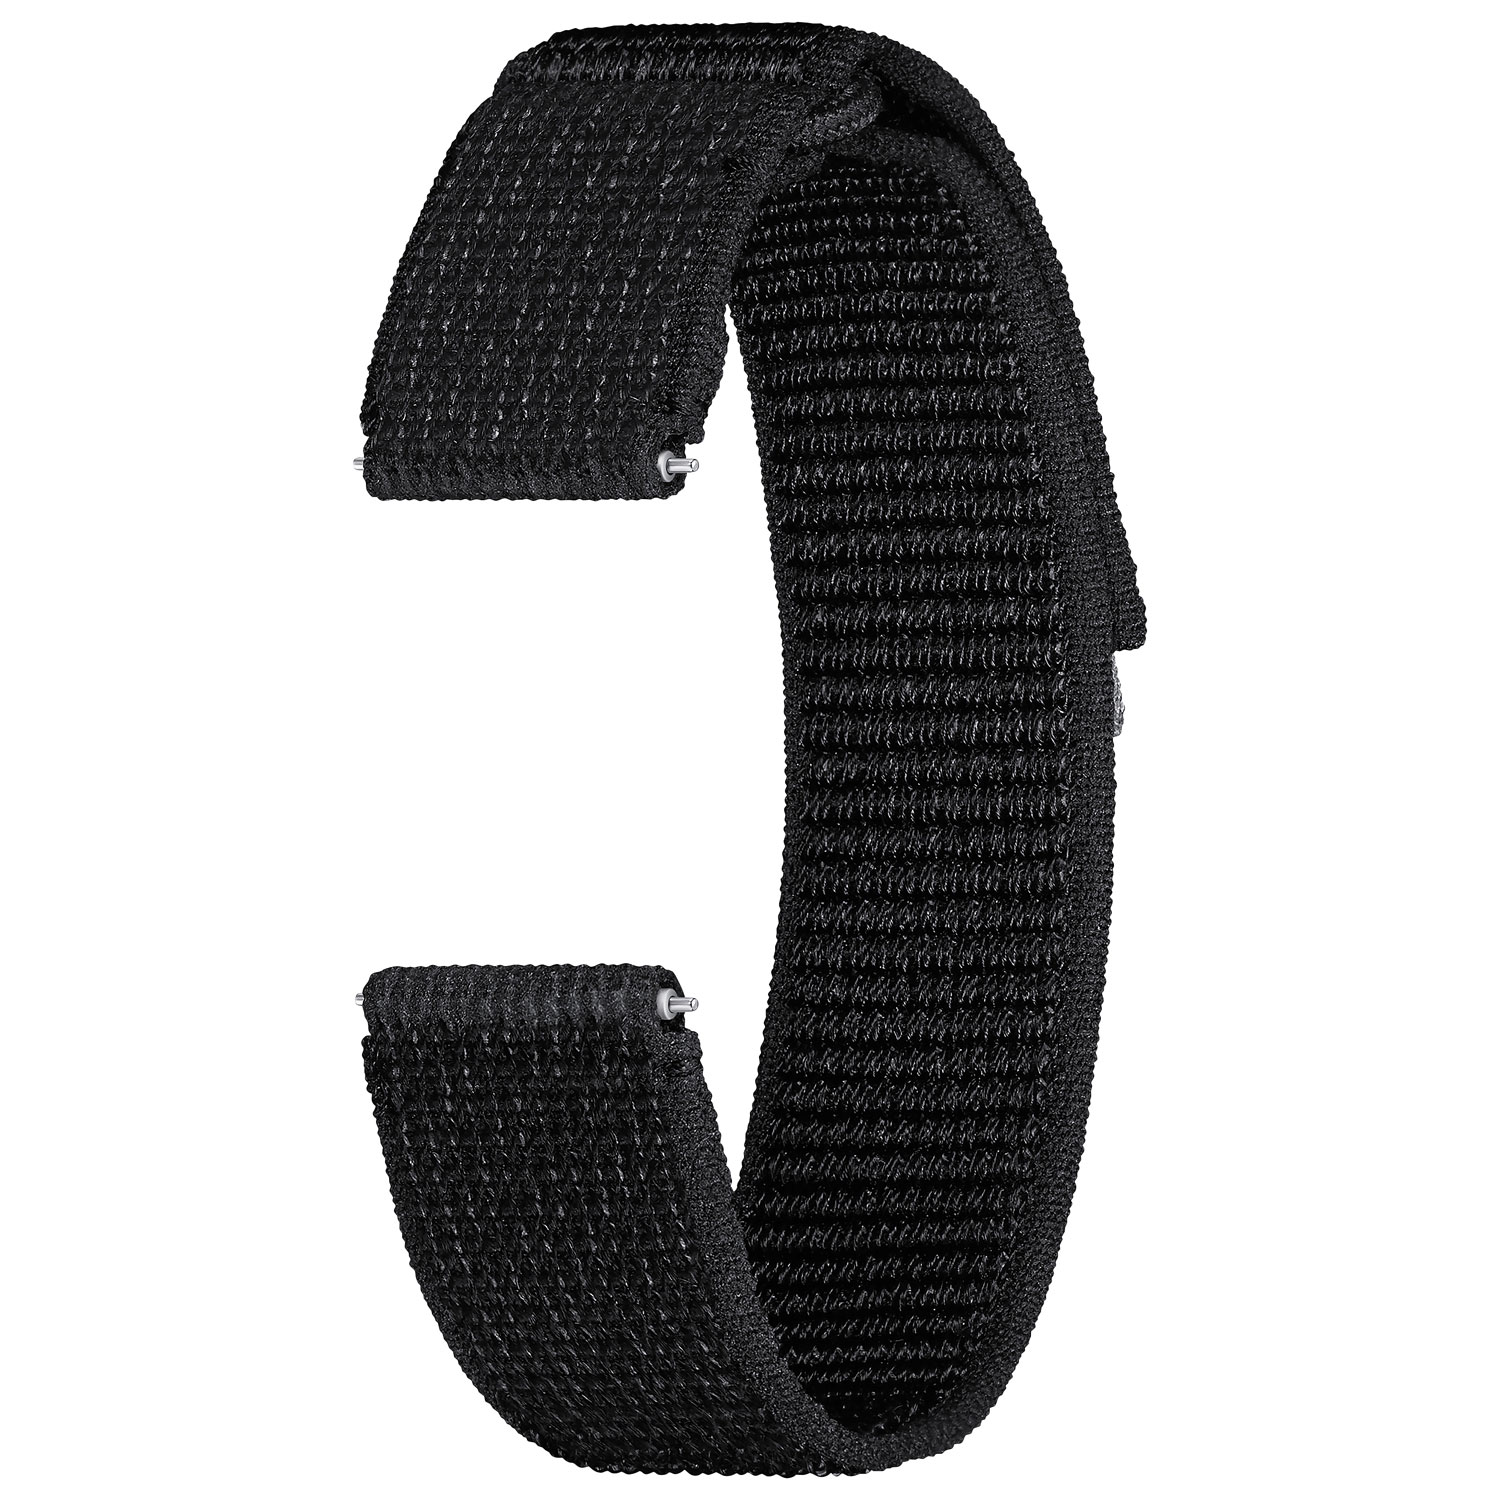 Samsung Feather Fabric Band for Galaxy Watch - Medium / Large - Black